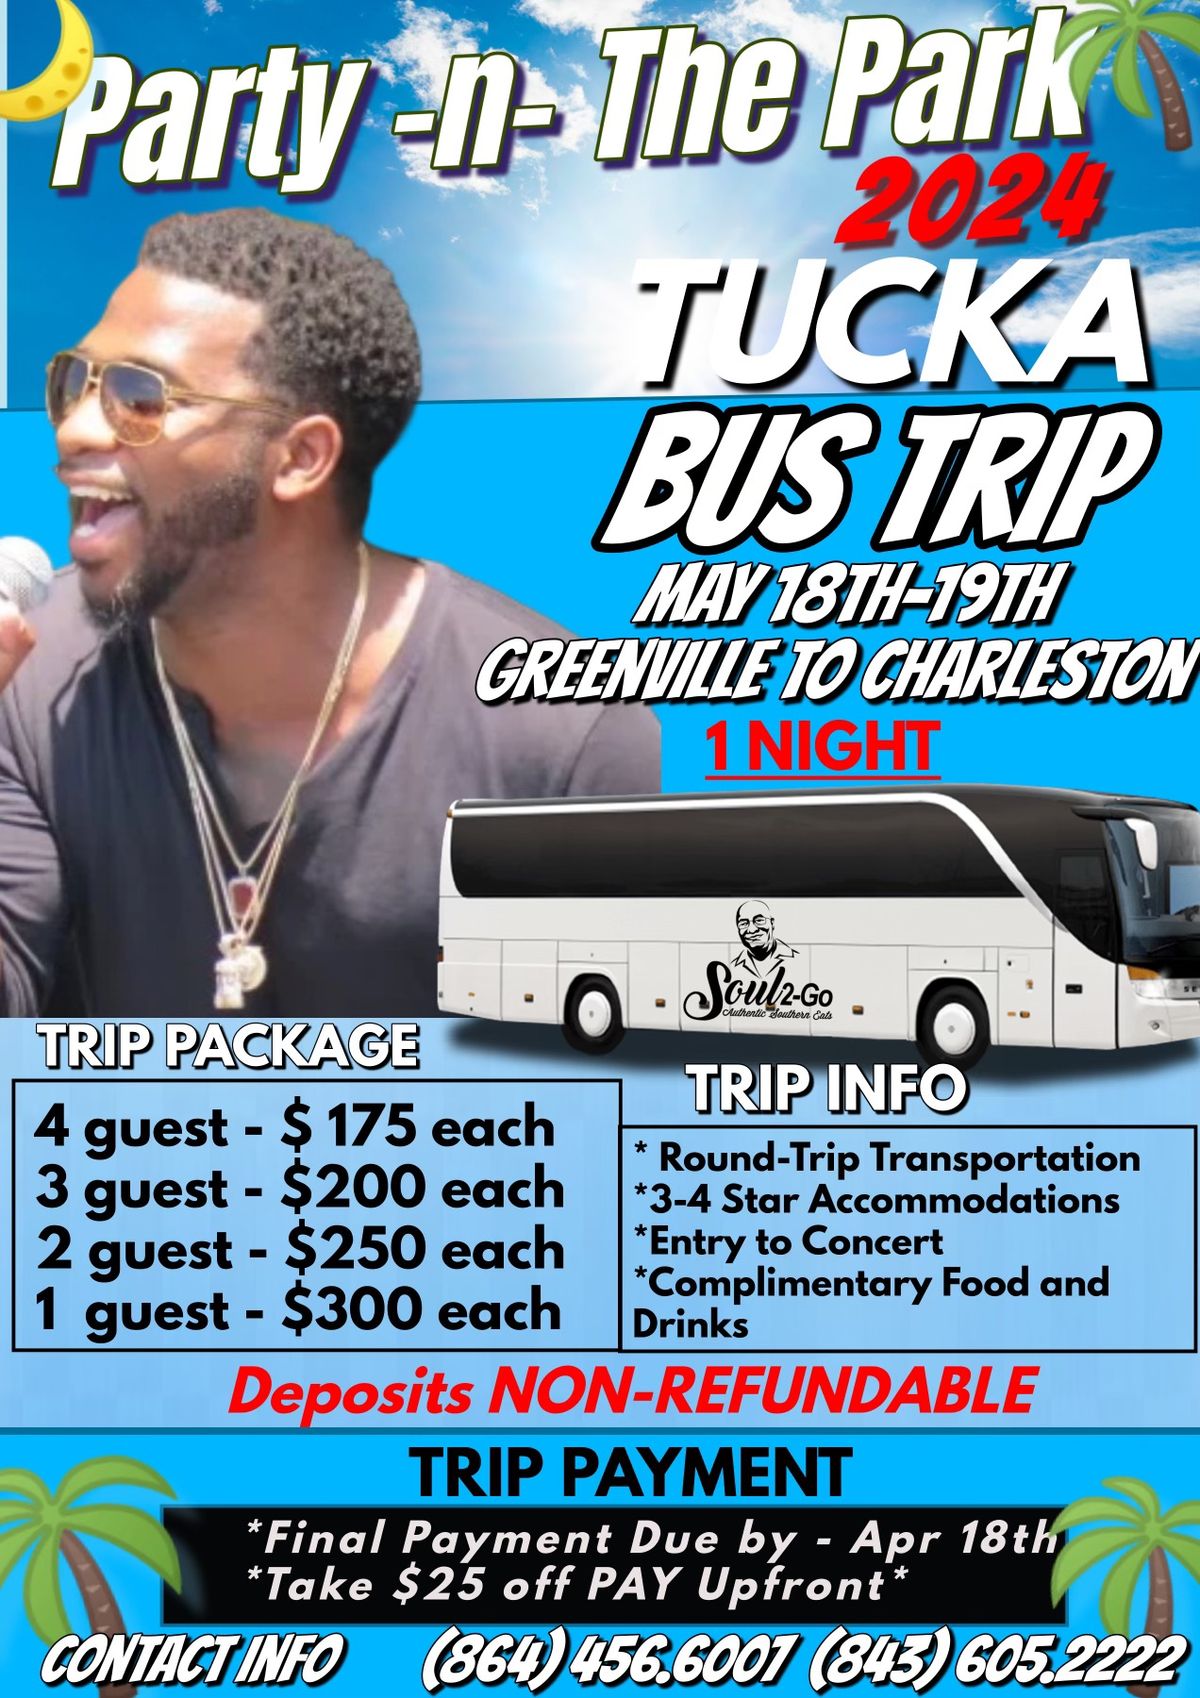 Tucka Bus Trip: GREENVILLE -2- CHARLESTON 